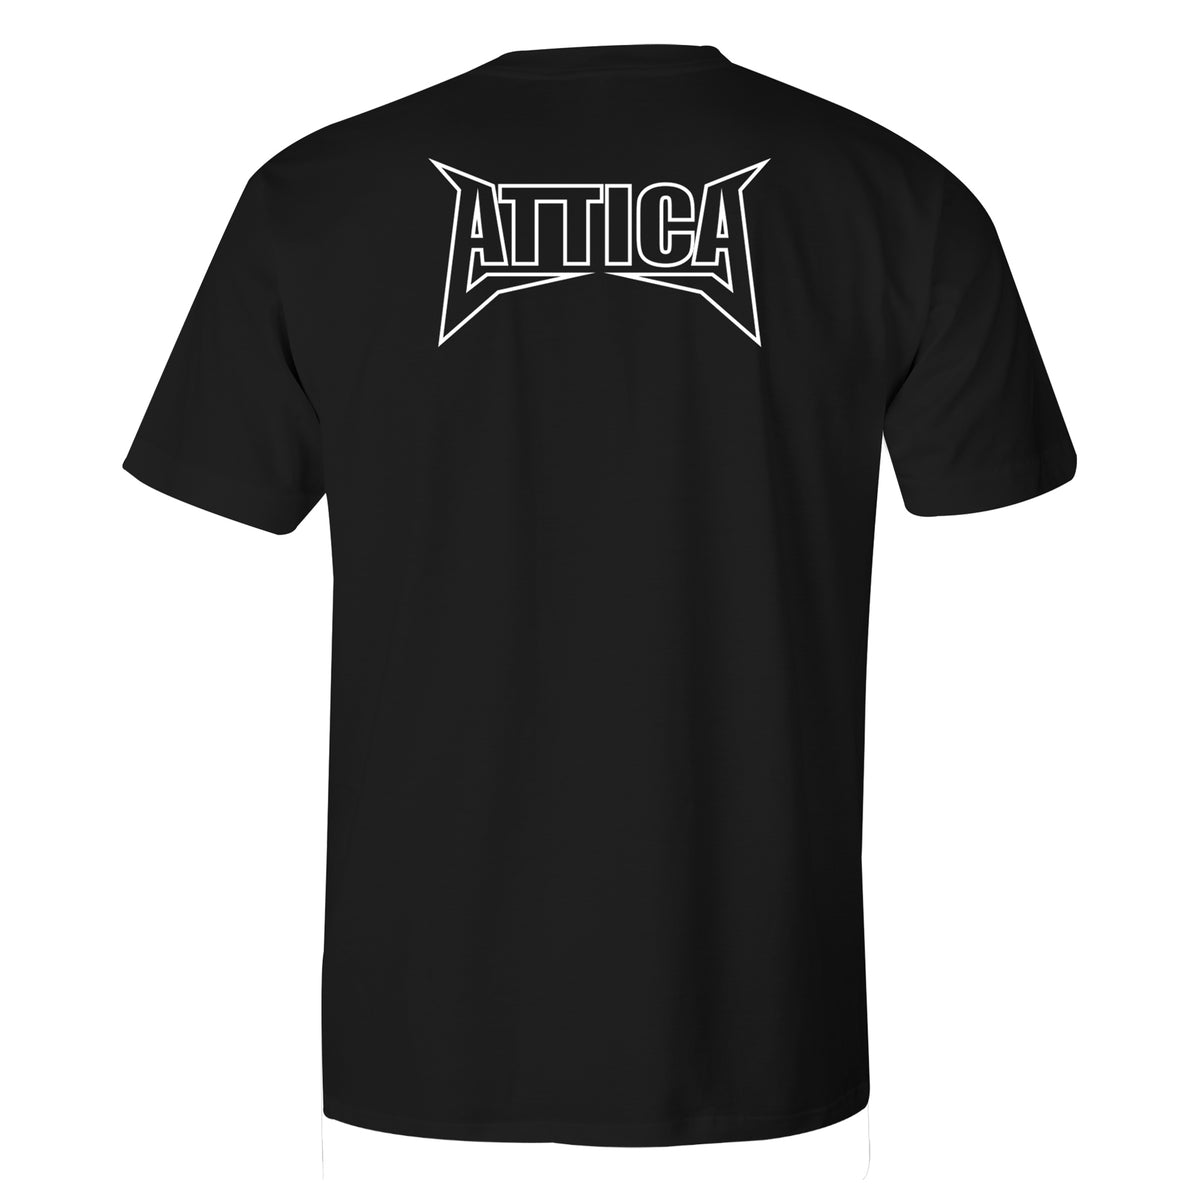 ATTICA 'Mental' T-Shirt - Black - Nomad Bodyboards